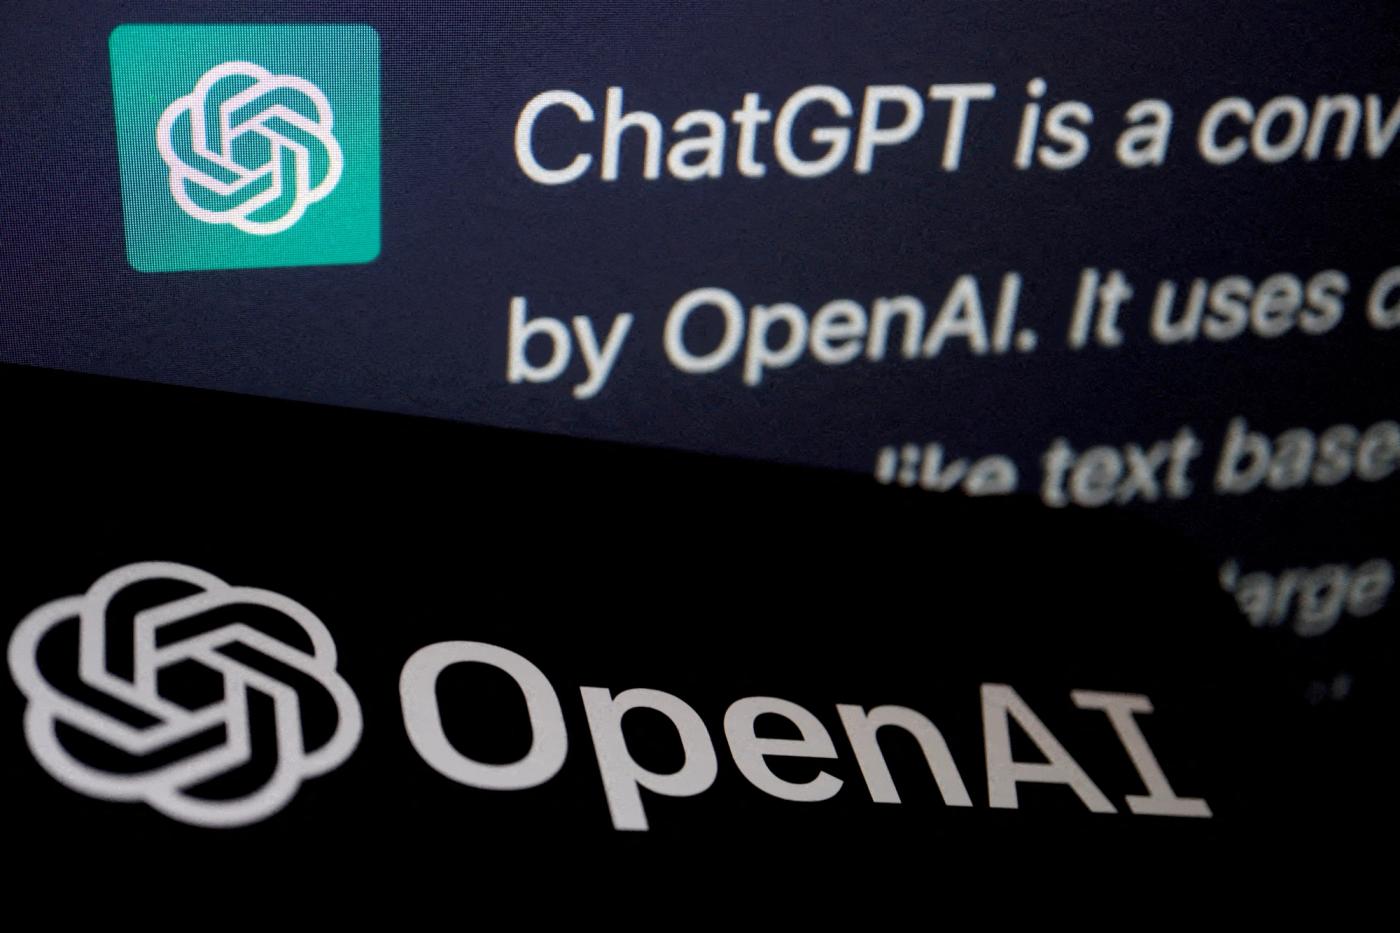 The logo of OpenAI.